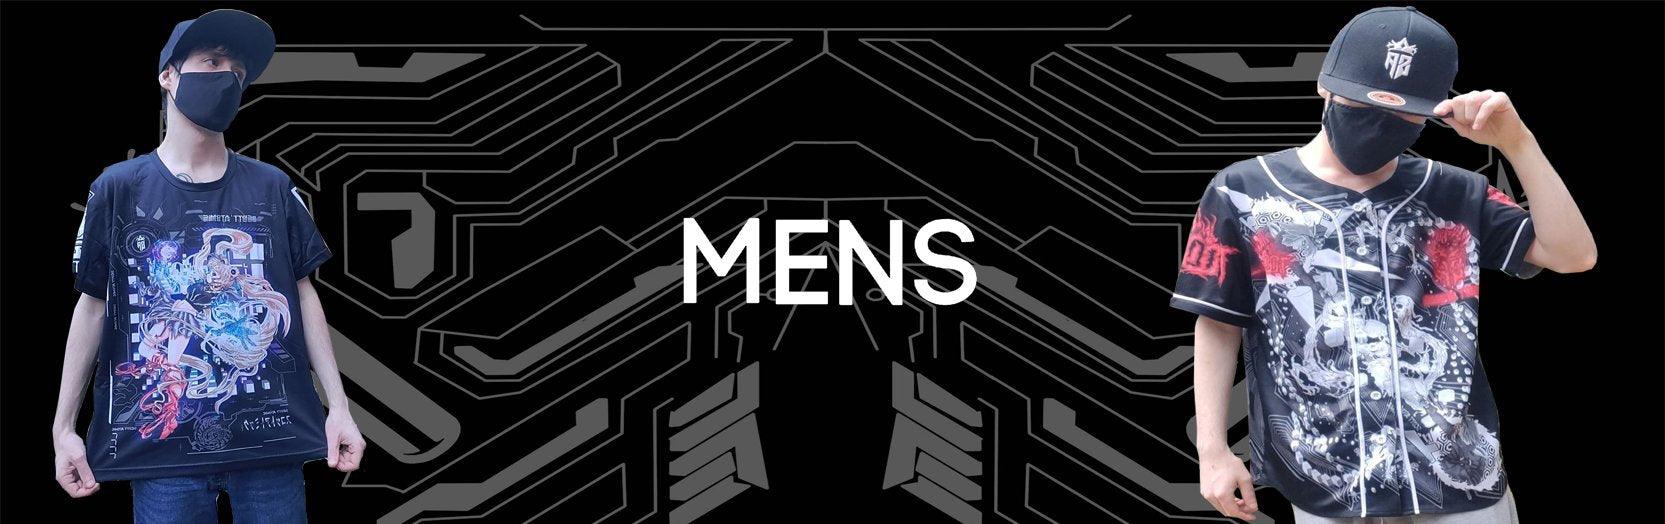 Mens - Scott Atomic™ merchandise